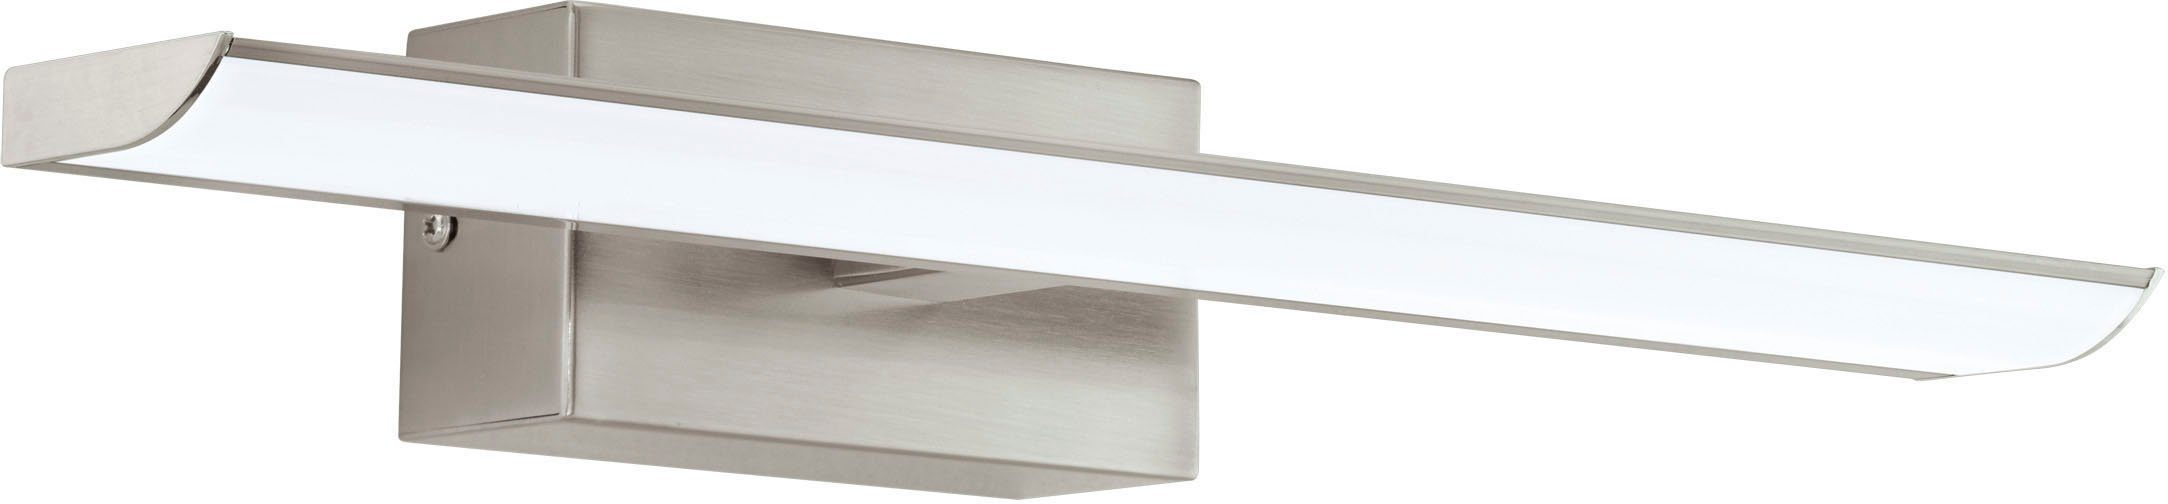 EGLO Spiegelleuchte fest LED Neutralweiß TABIANO, integriert